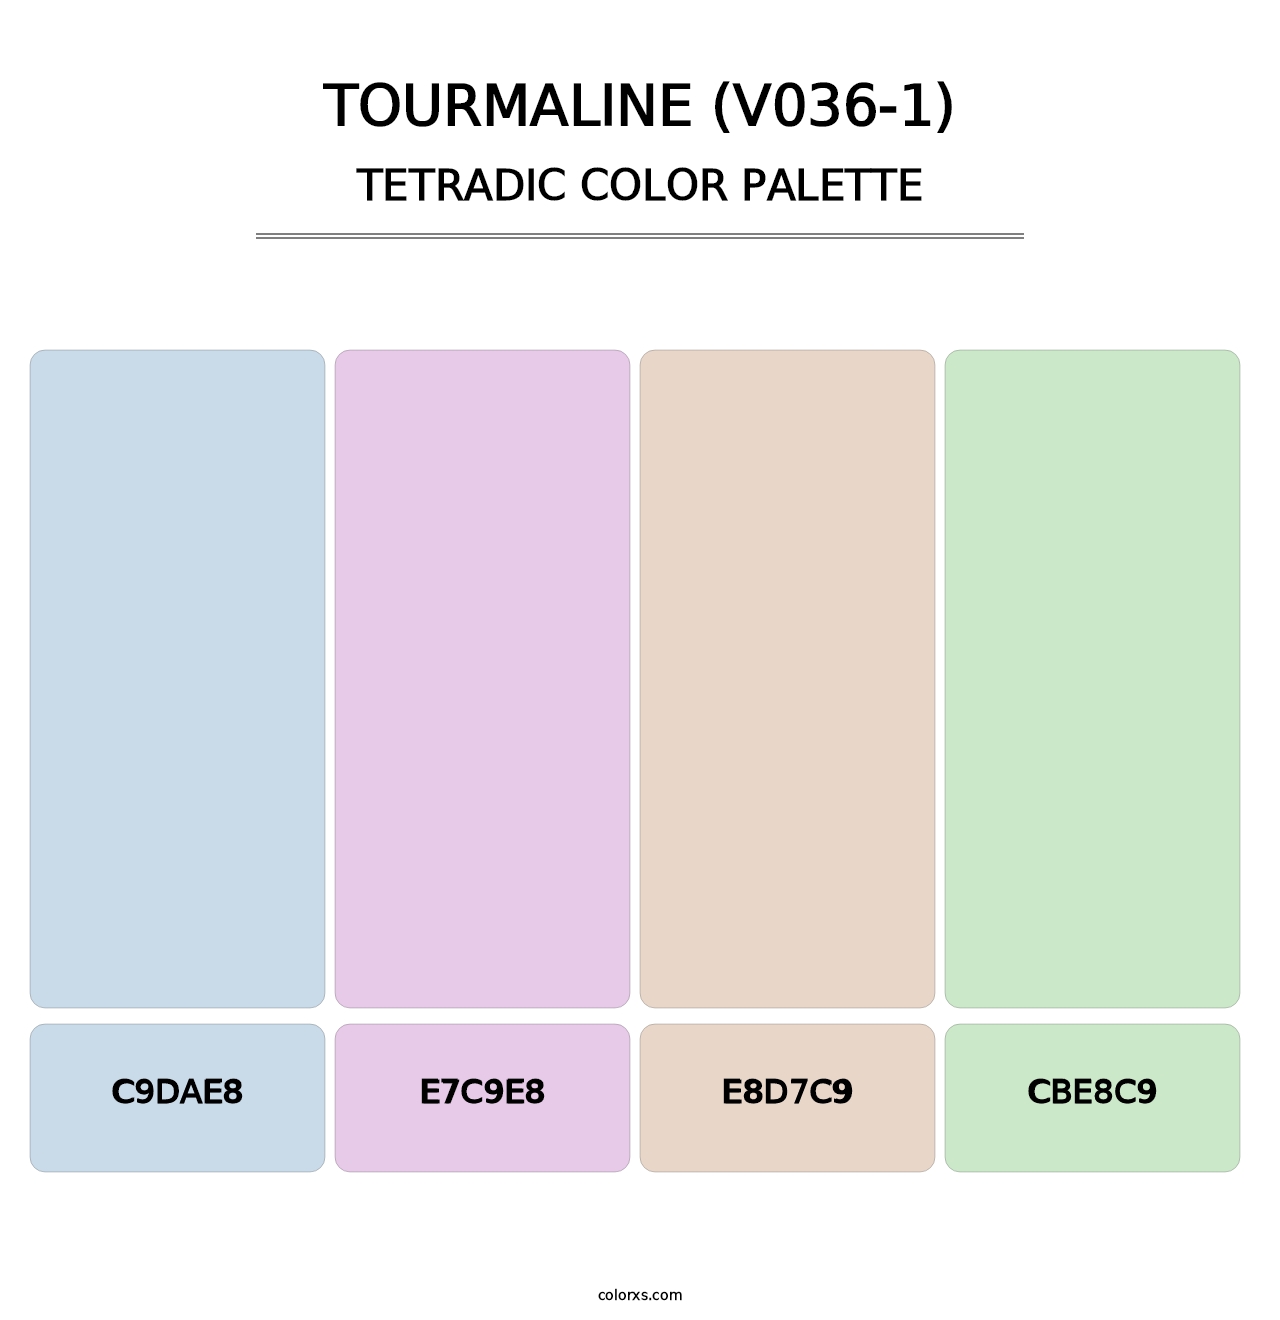 Tourmaline (V036-1) - Tetradic Color Palette